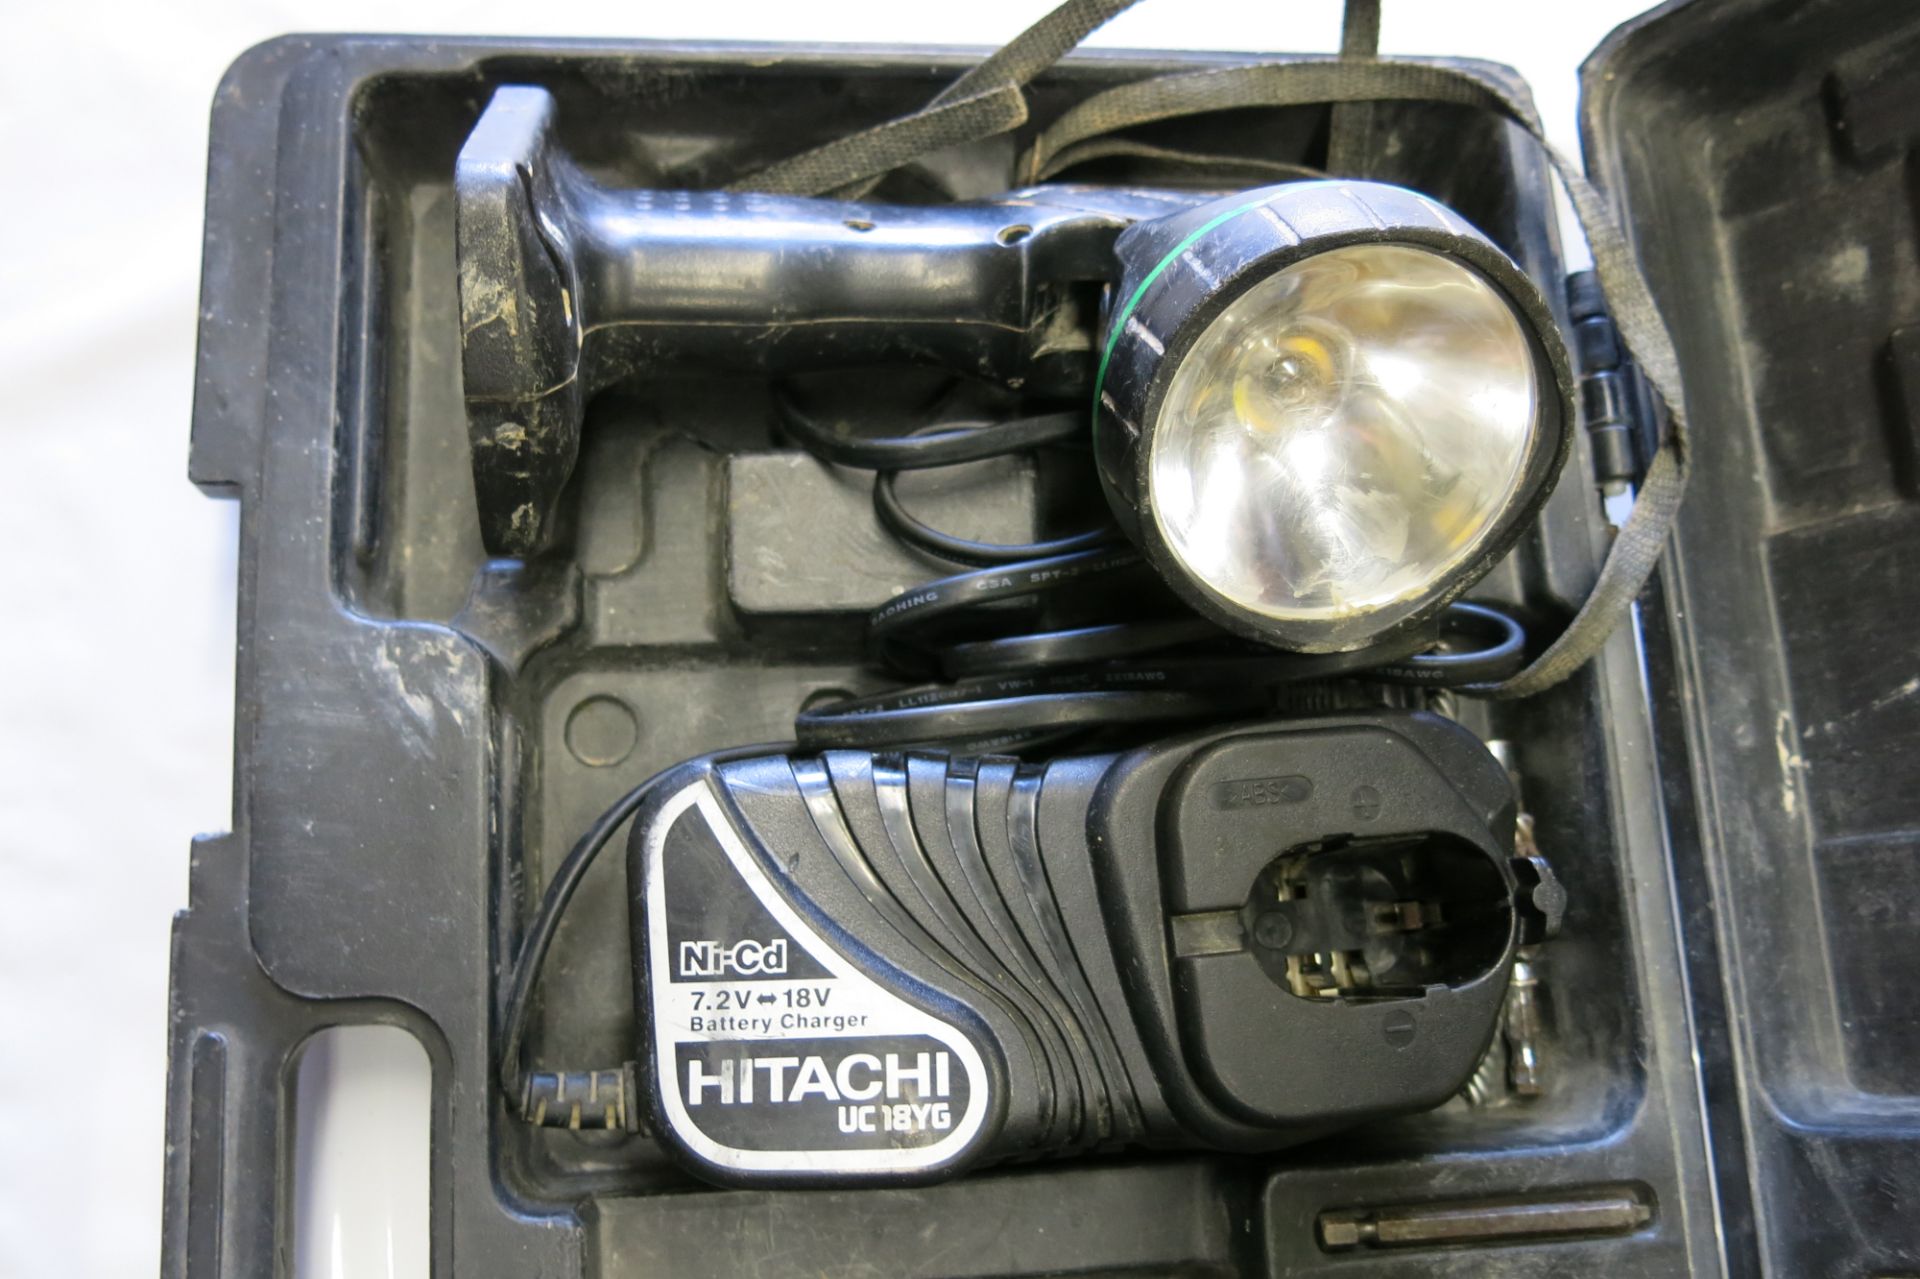 HITACHI, DS 18DVF3, CORDLESS DRIVER DRILL WITH HITACHI, UB 180, CORDLESS FLASHLIGHTS, BATTERIES - Image 8 of 8